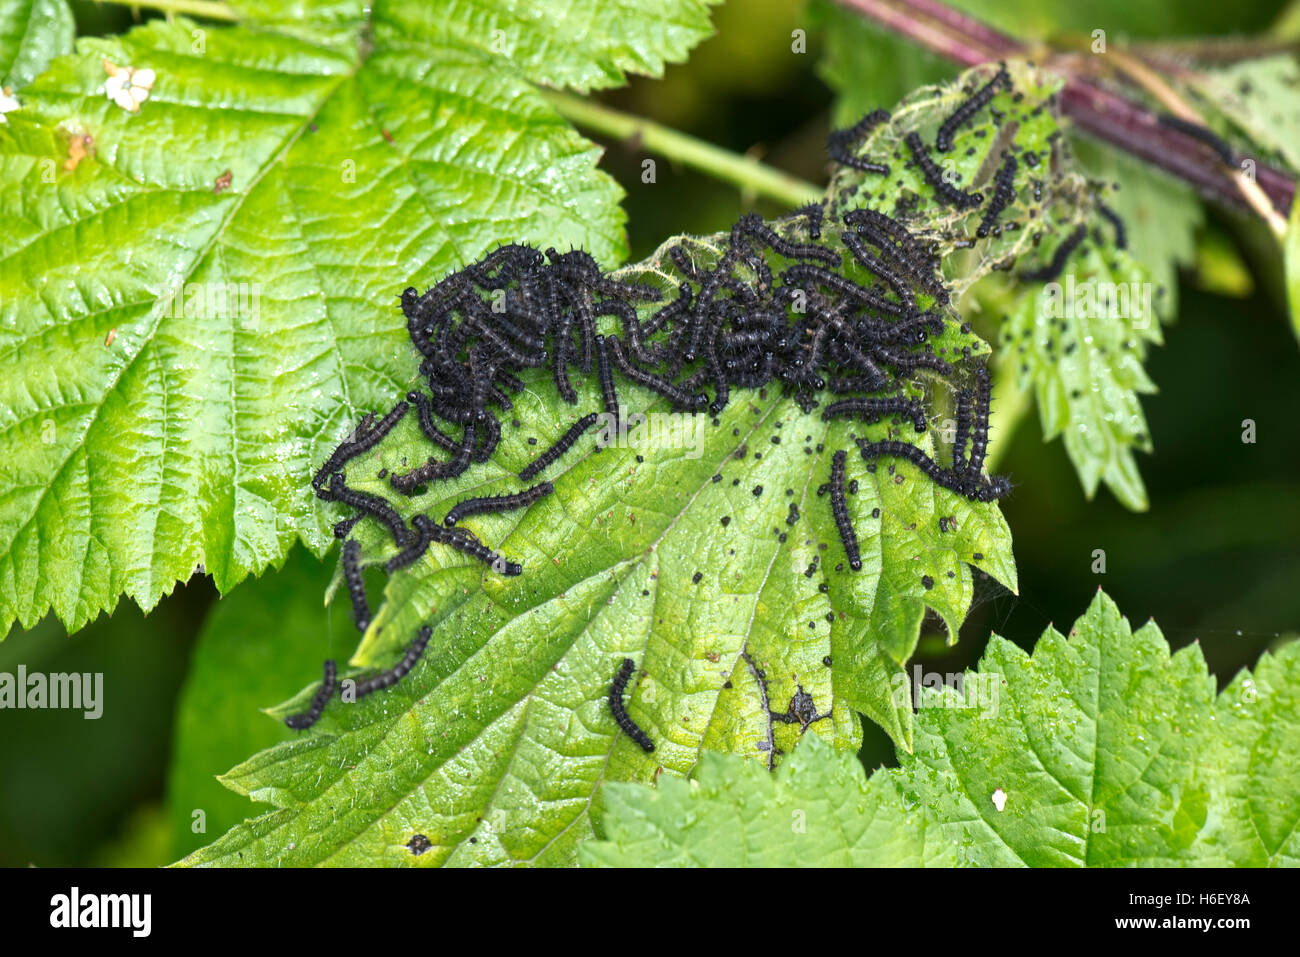 Tagpfauenauge, Nymphalis io, Raupen auf Brennessel Blätter, Hampshire, Juni Stockfoto